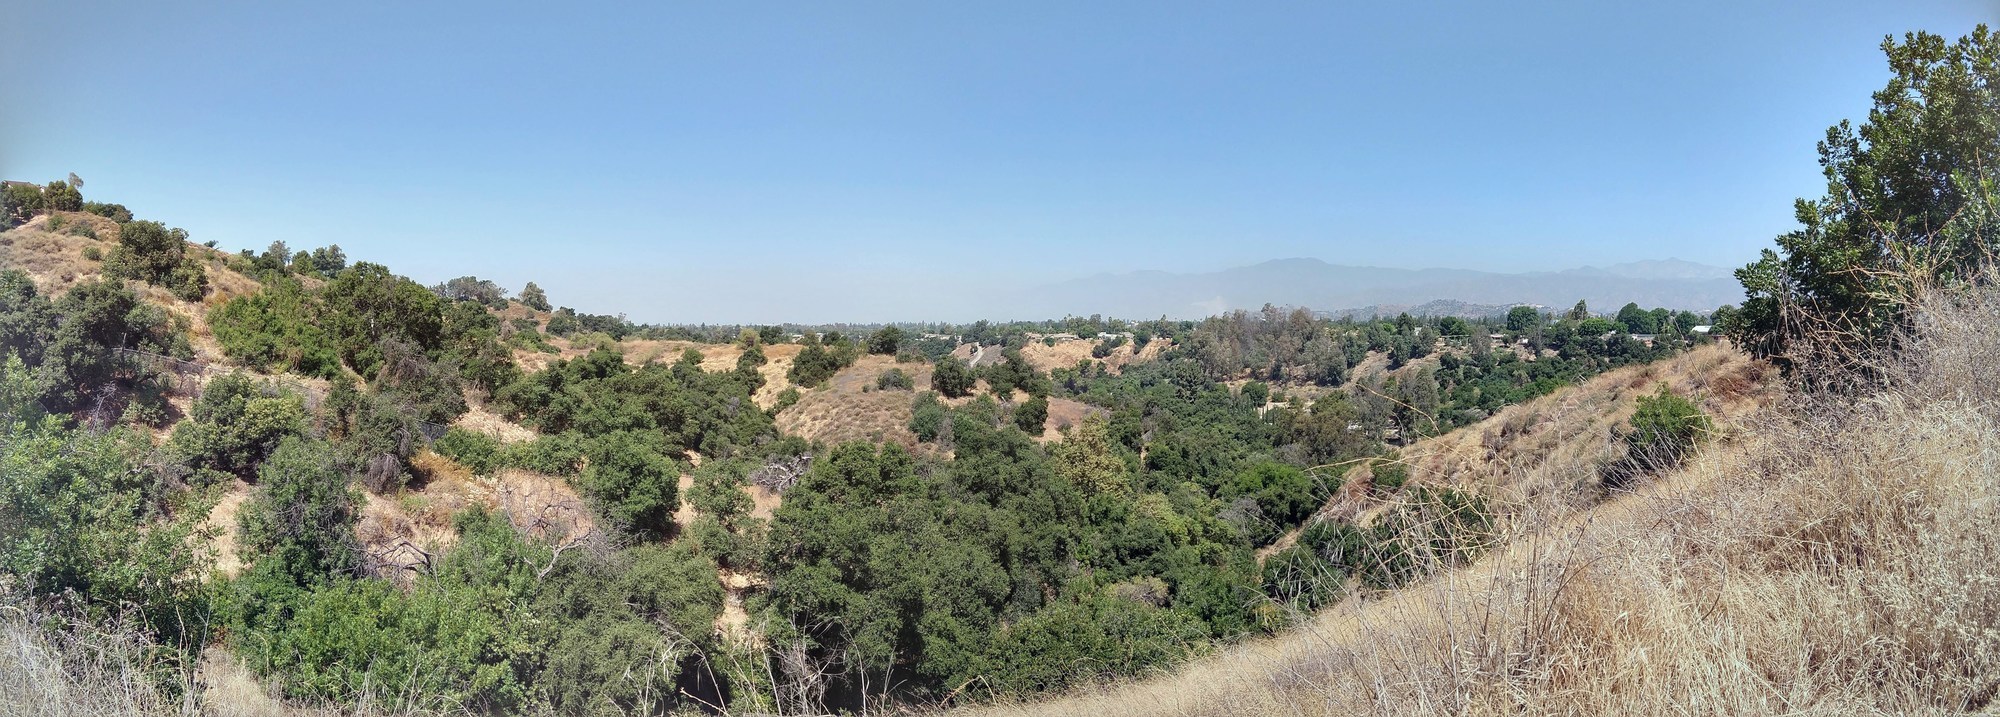 Hiking the Antonovich Trail in San Dimas, CA